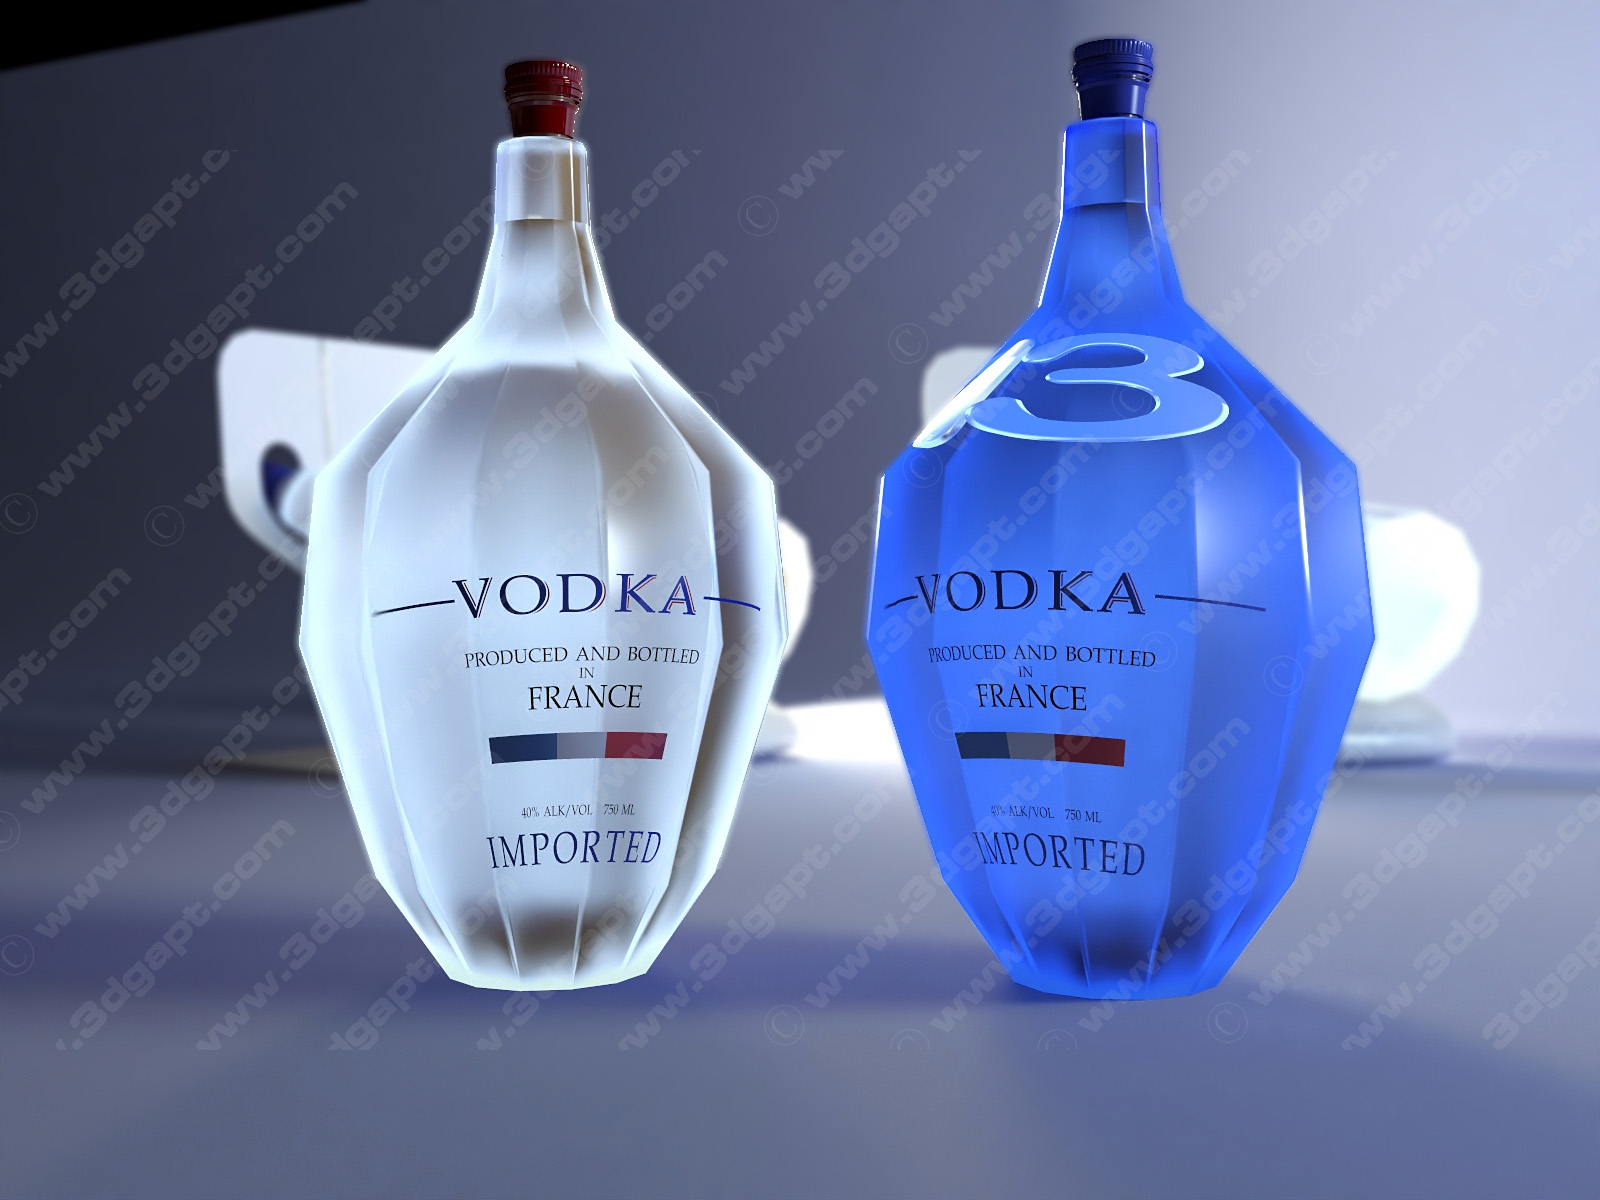 13 sided vodka bottle - 13